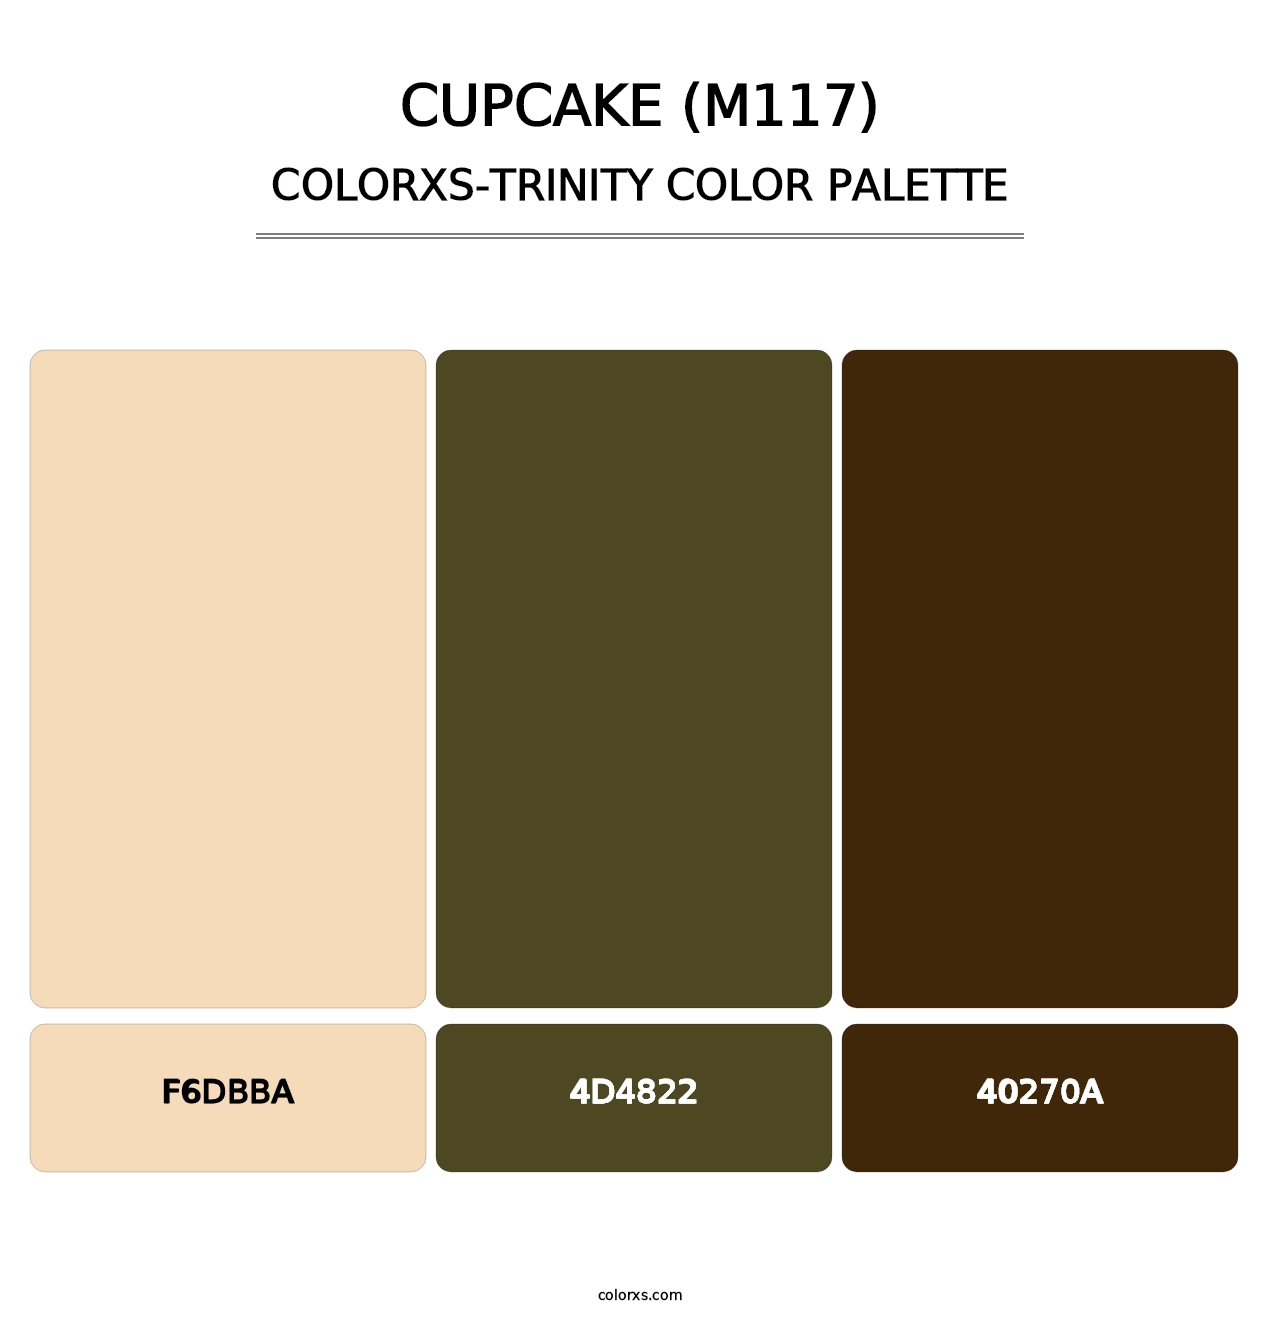 Cupcake (M117) - Colorxs Trinity Palette